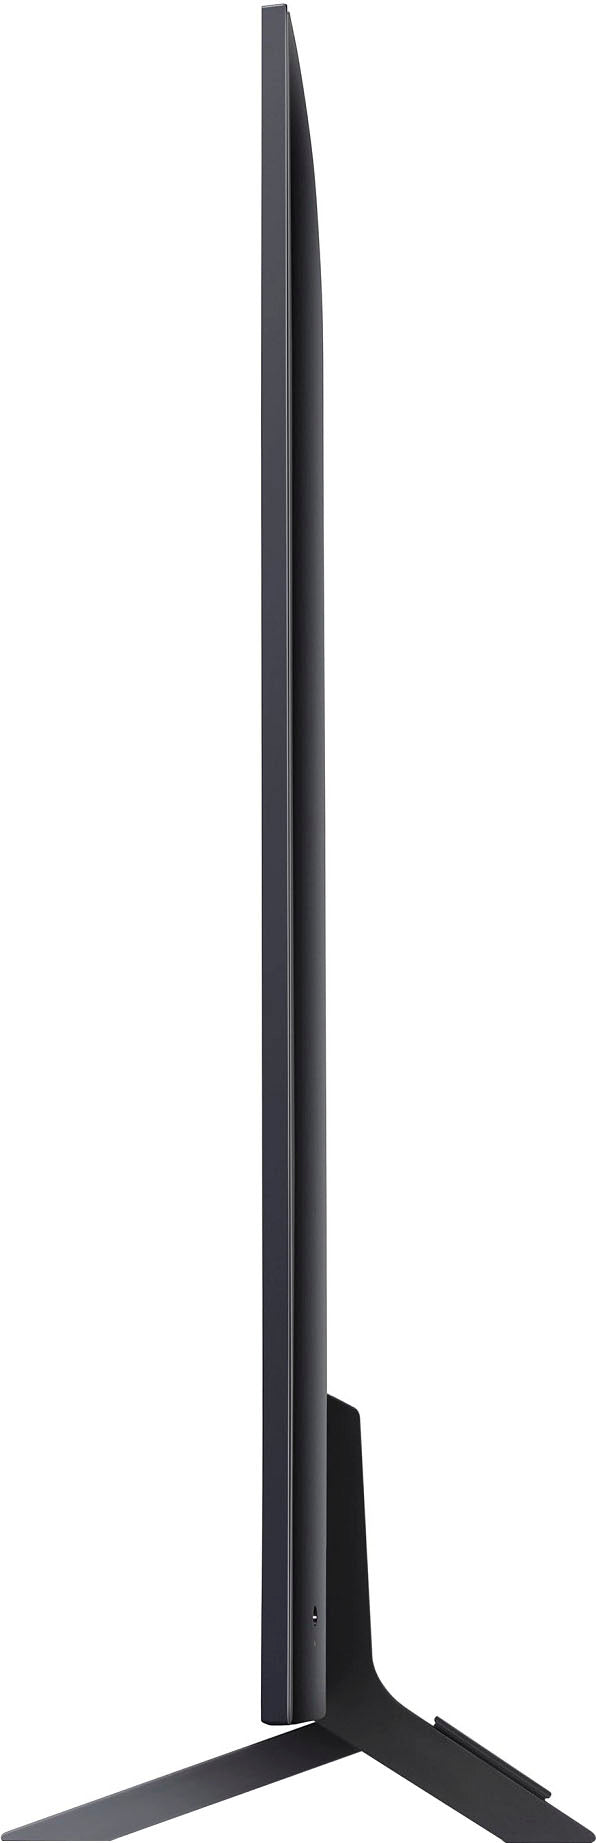 LG - 43” Class UR9000 Series LED 4K UHD Smart webOS TV_10